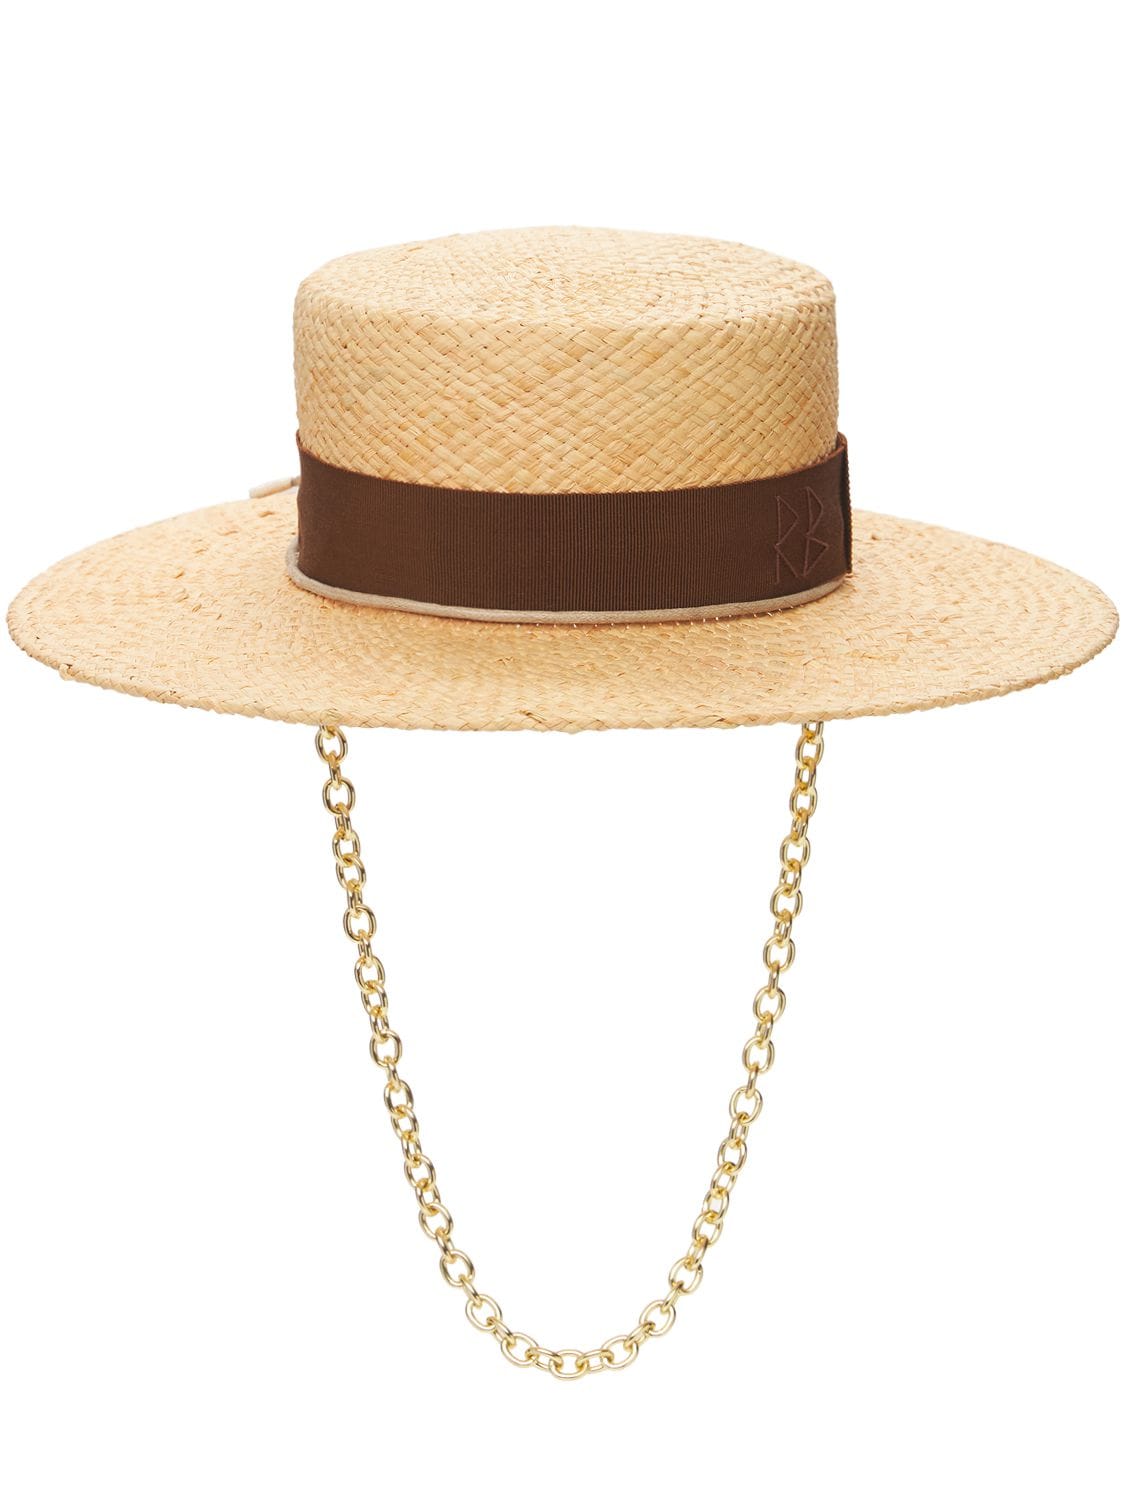 Chain Strap Straw Boater Hat